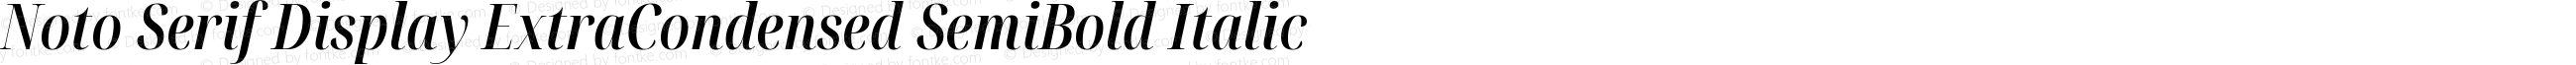 Noto Serif Display ExtraCondensed SemiBold Italic